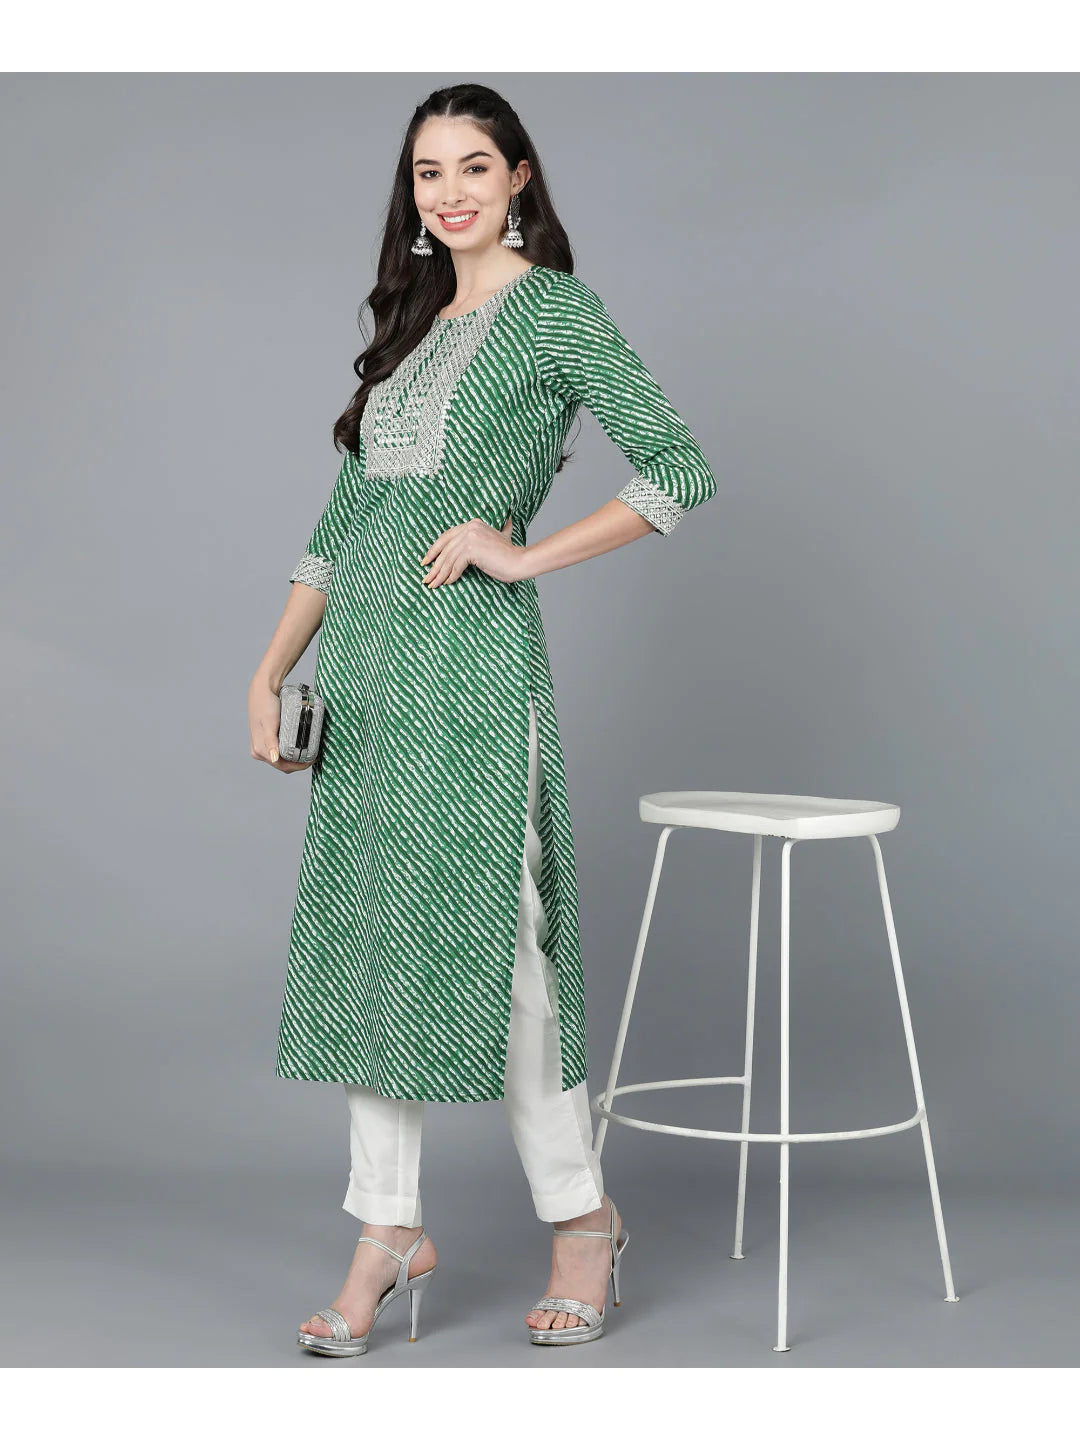 Green Lehariya cotton Kurti with Zari Embroidery work (Top Only)